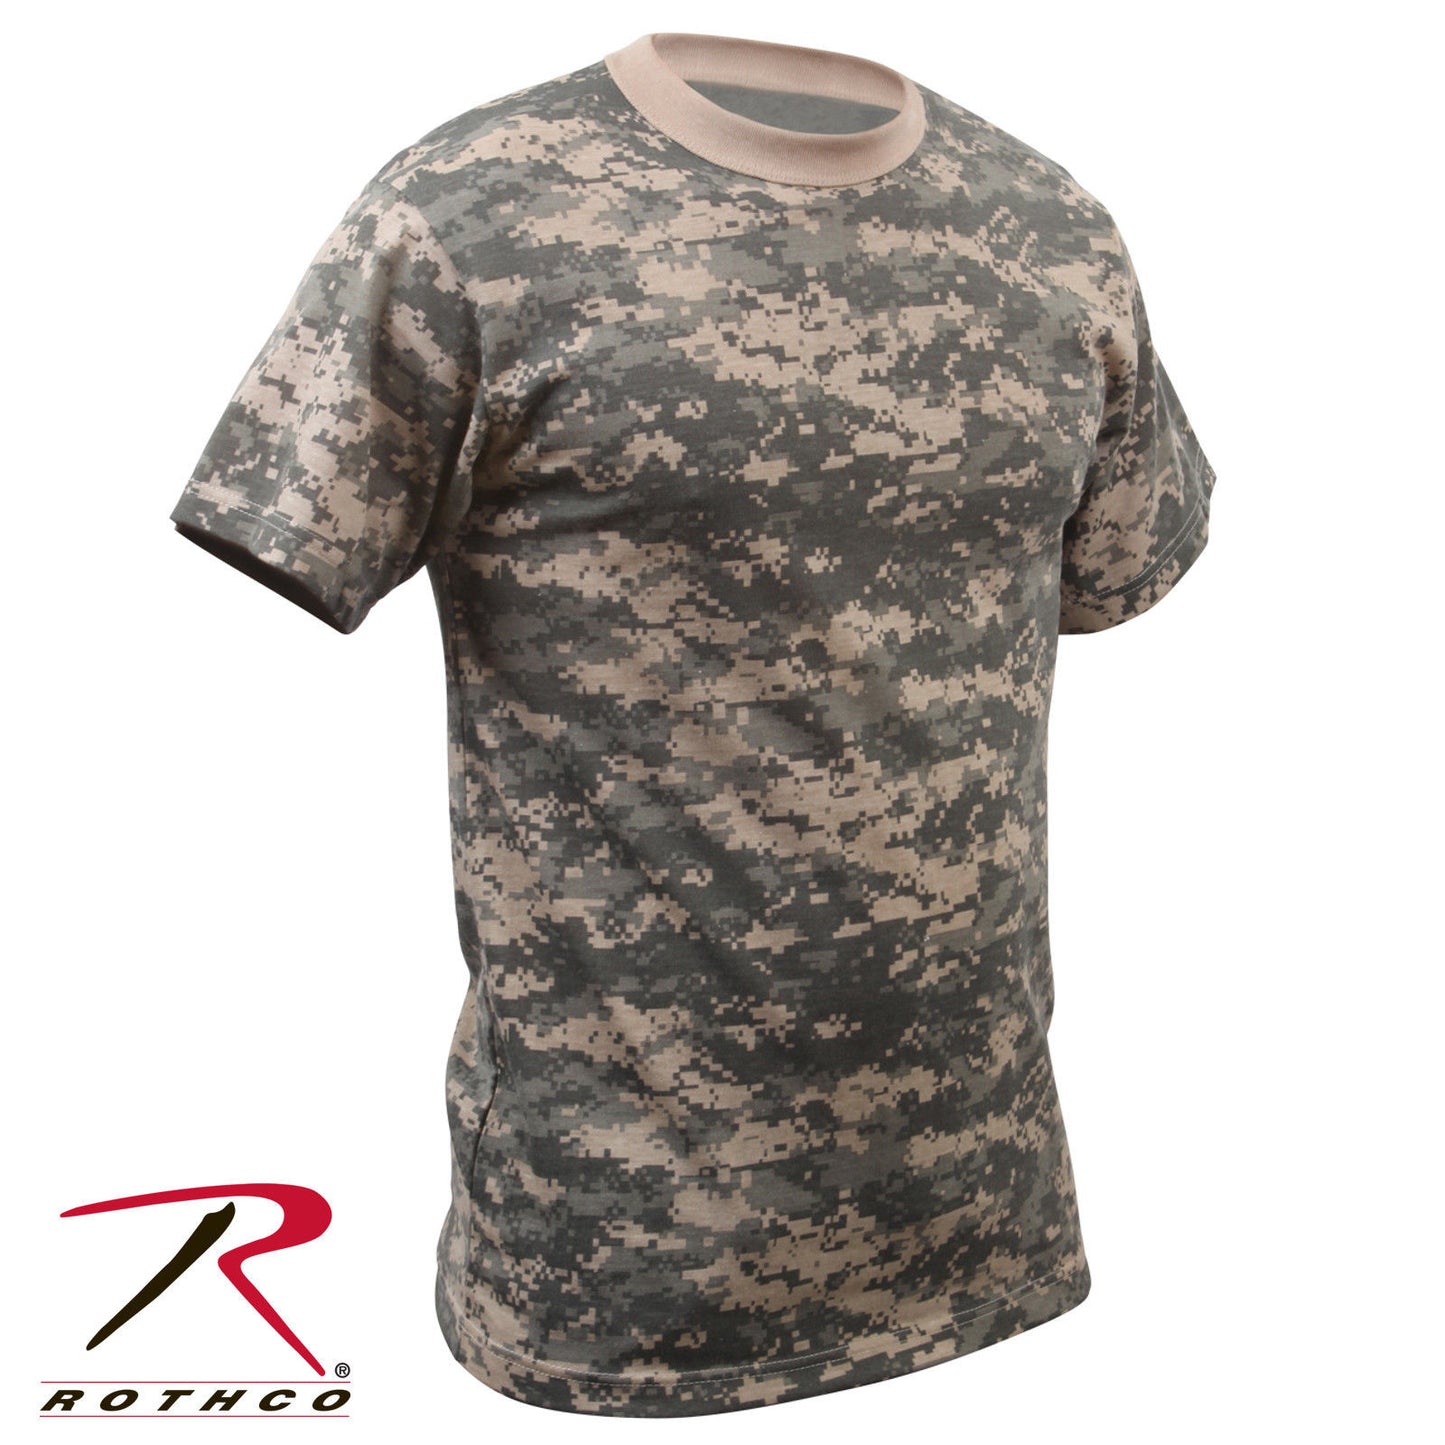 Rothco Men's ACU Digital Camo Short Sleeve T-Shirt